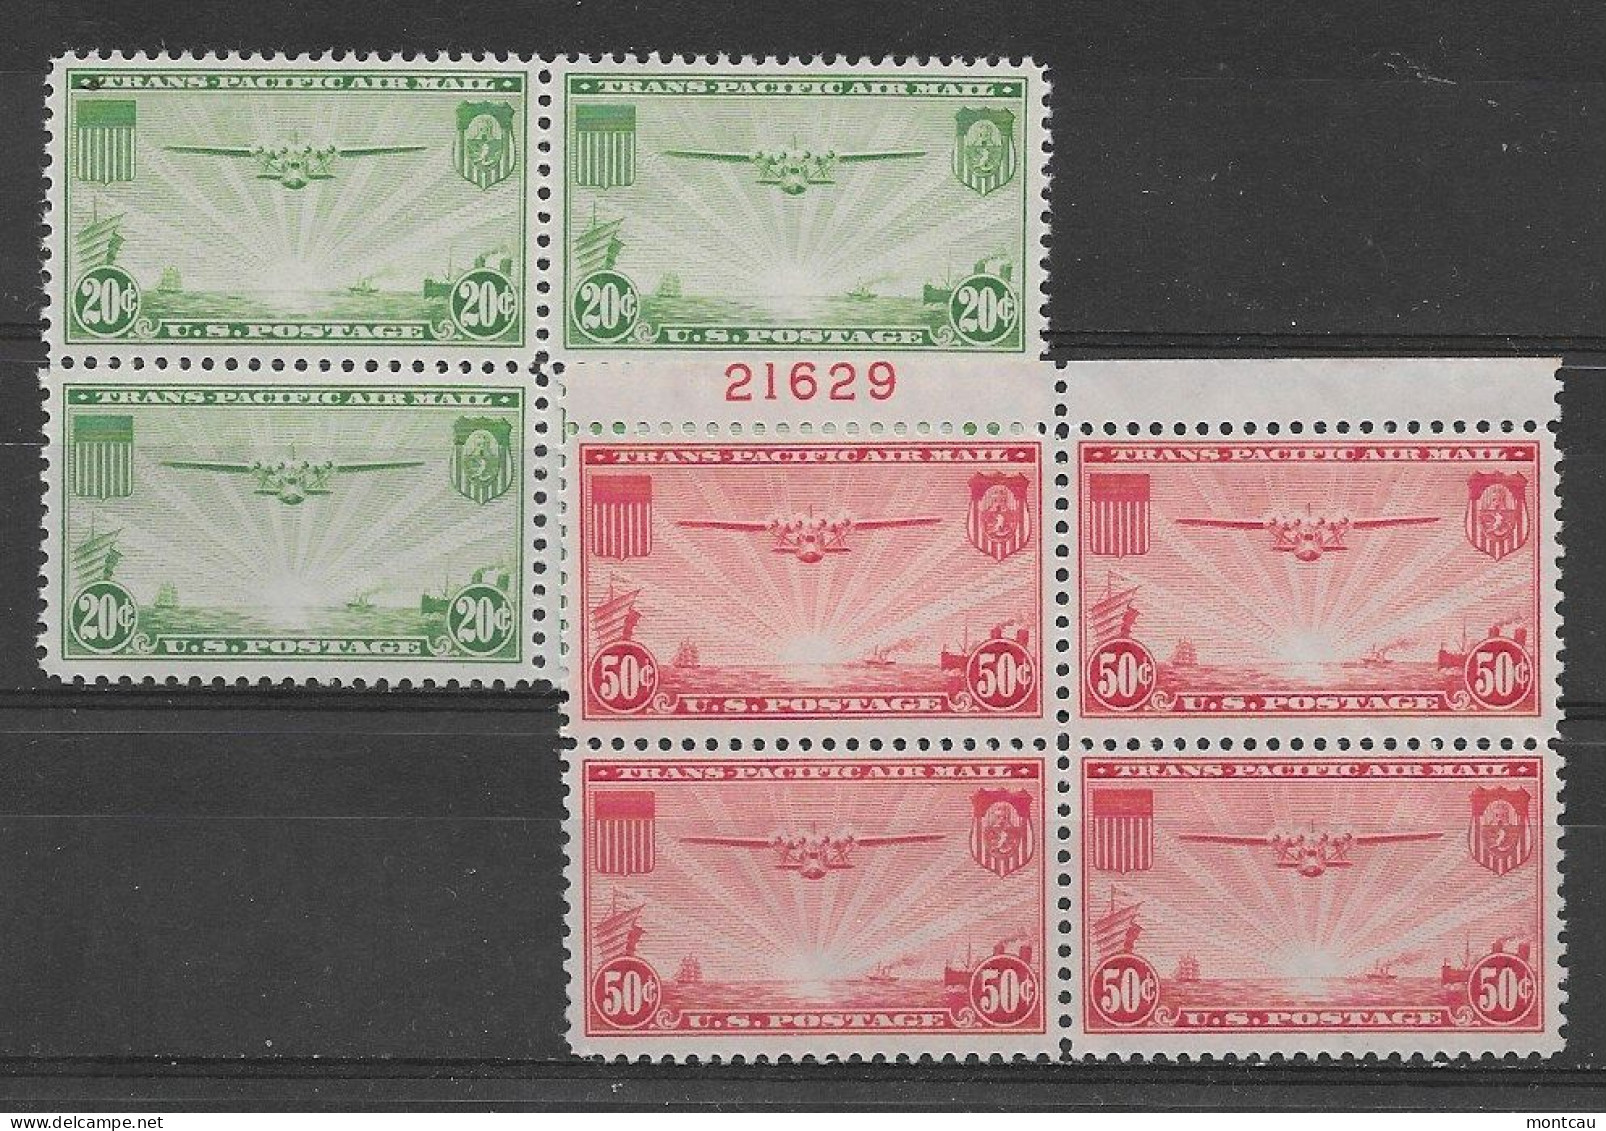 USA 1937.  Hawaii-Guam Sc C21-22  (**) - 1b. 1918-1940 Unused